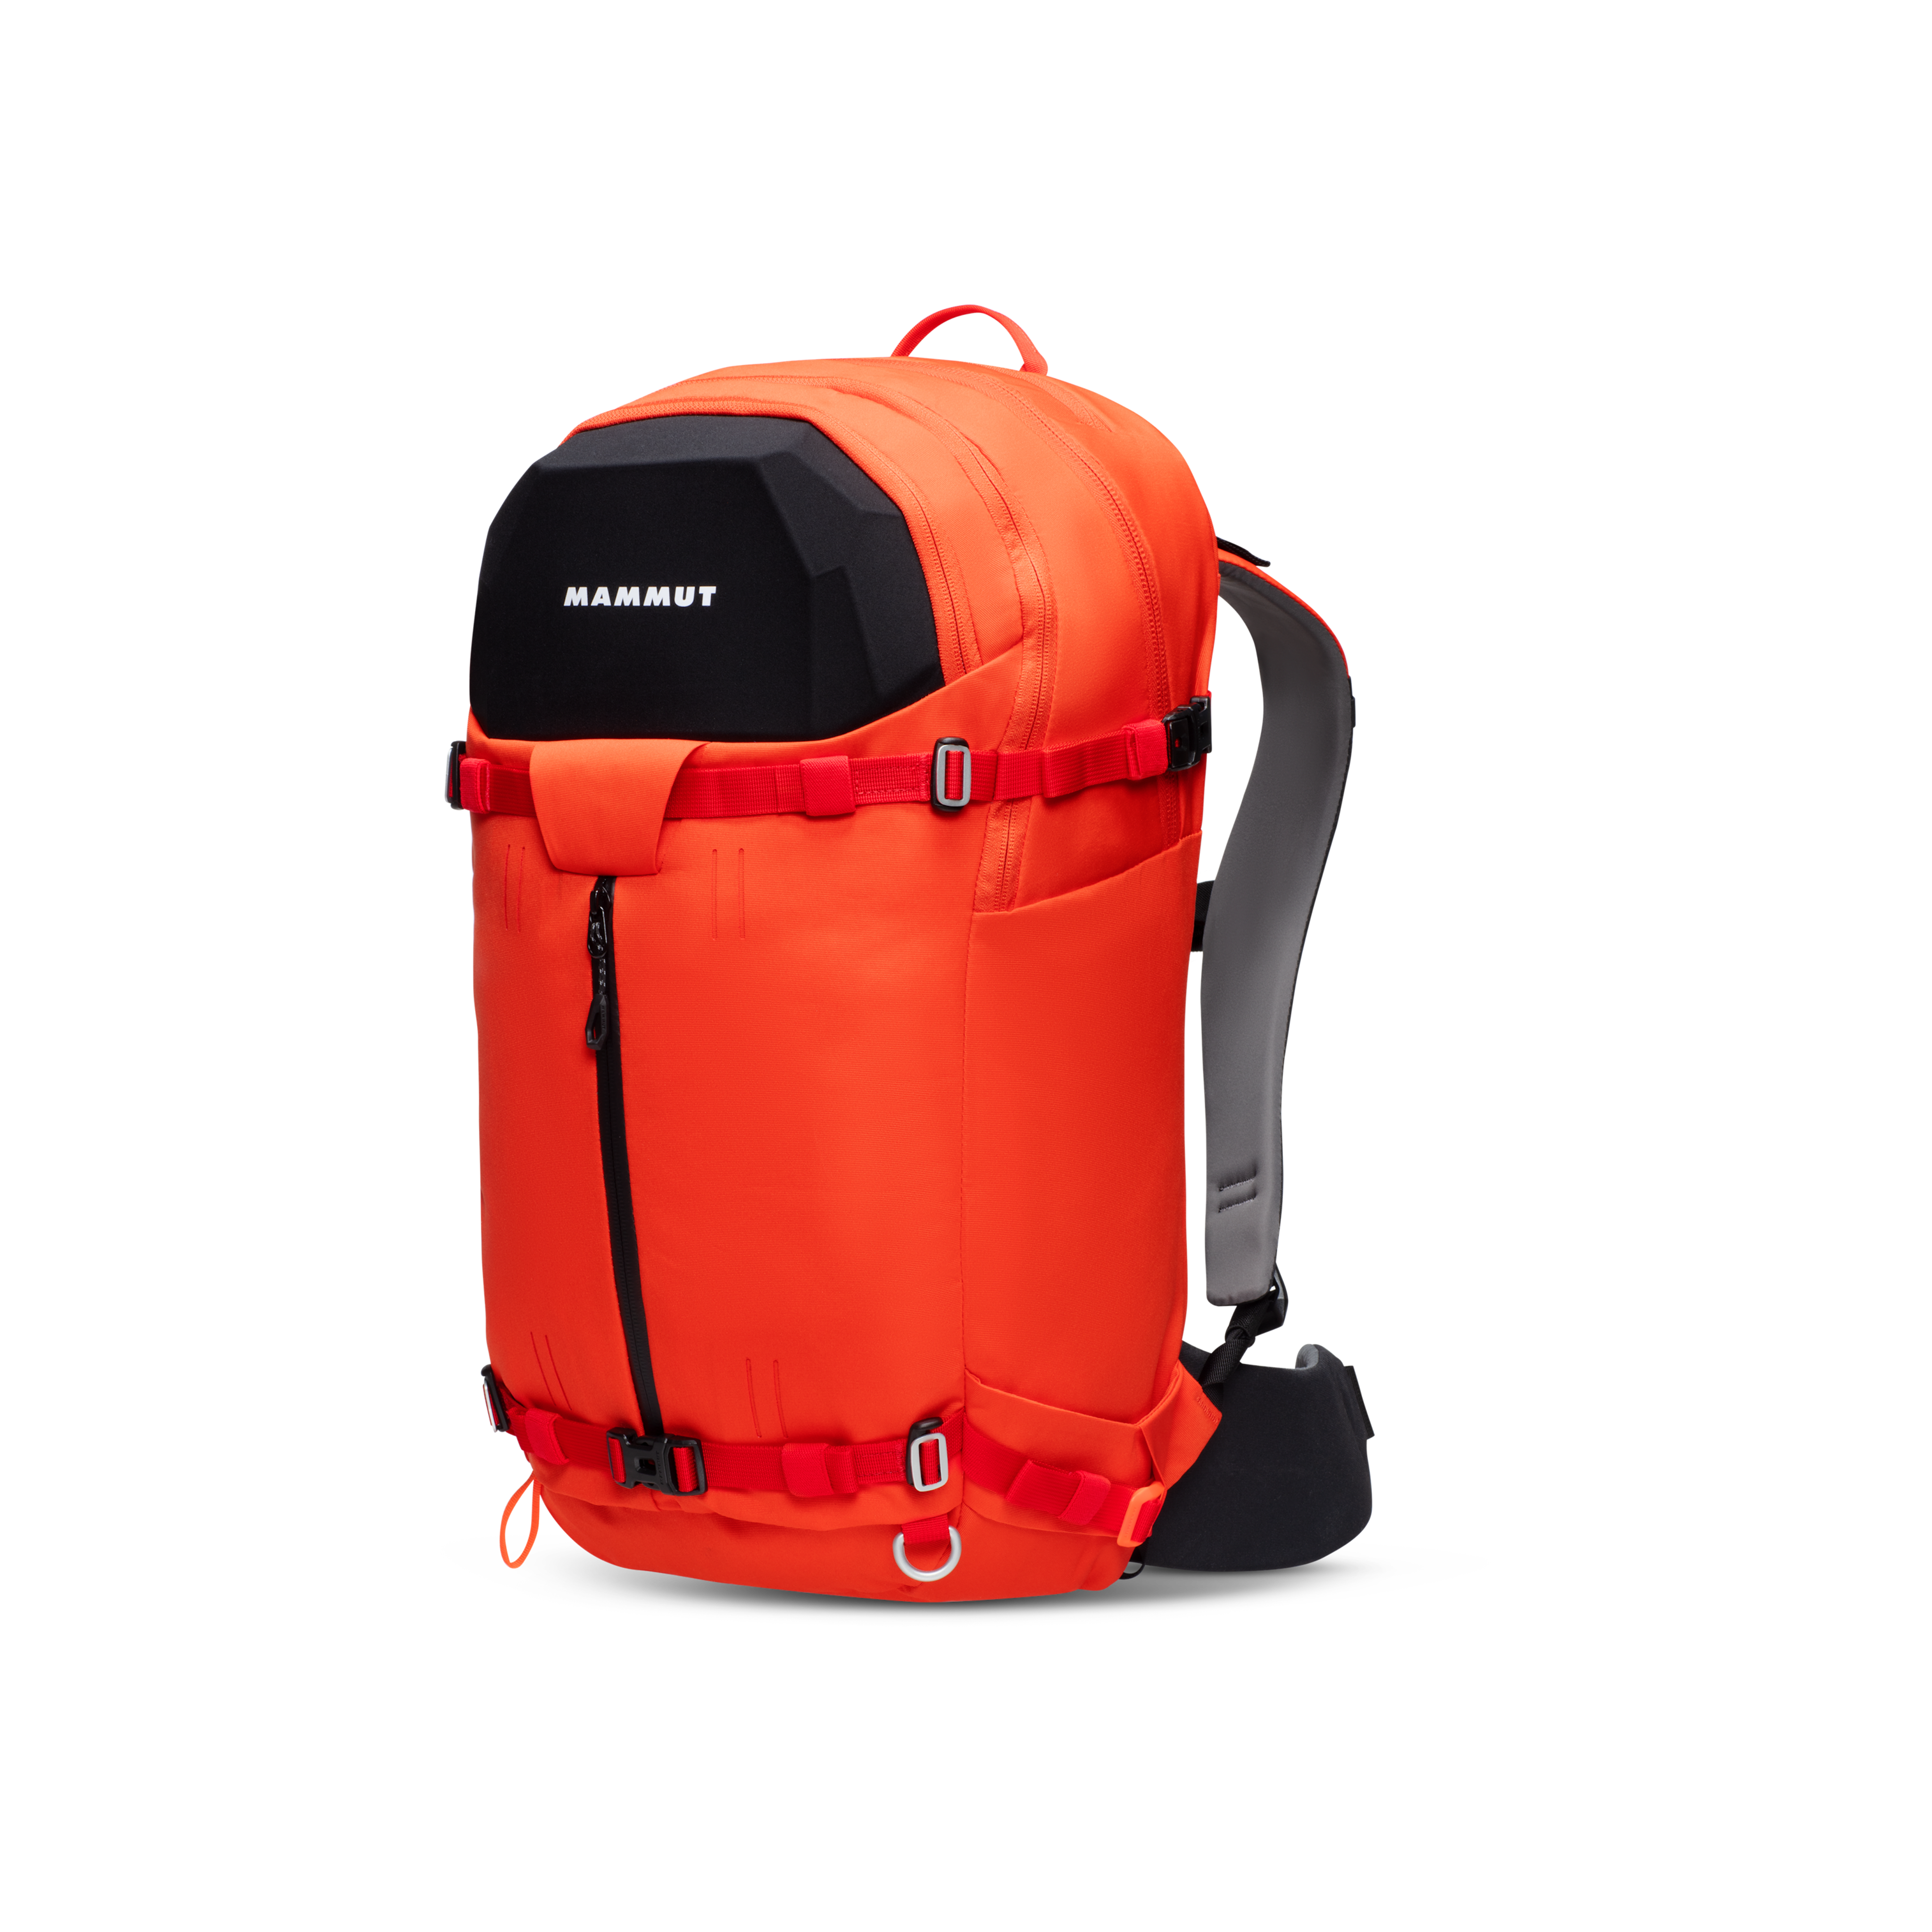 Mammut backpack in orange